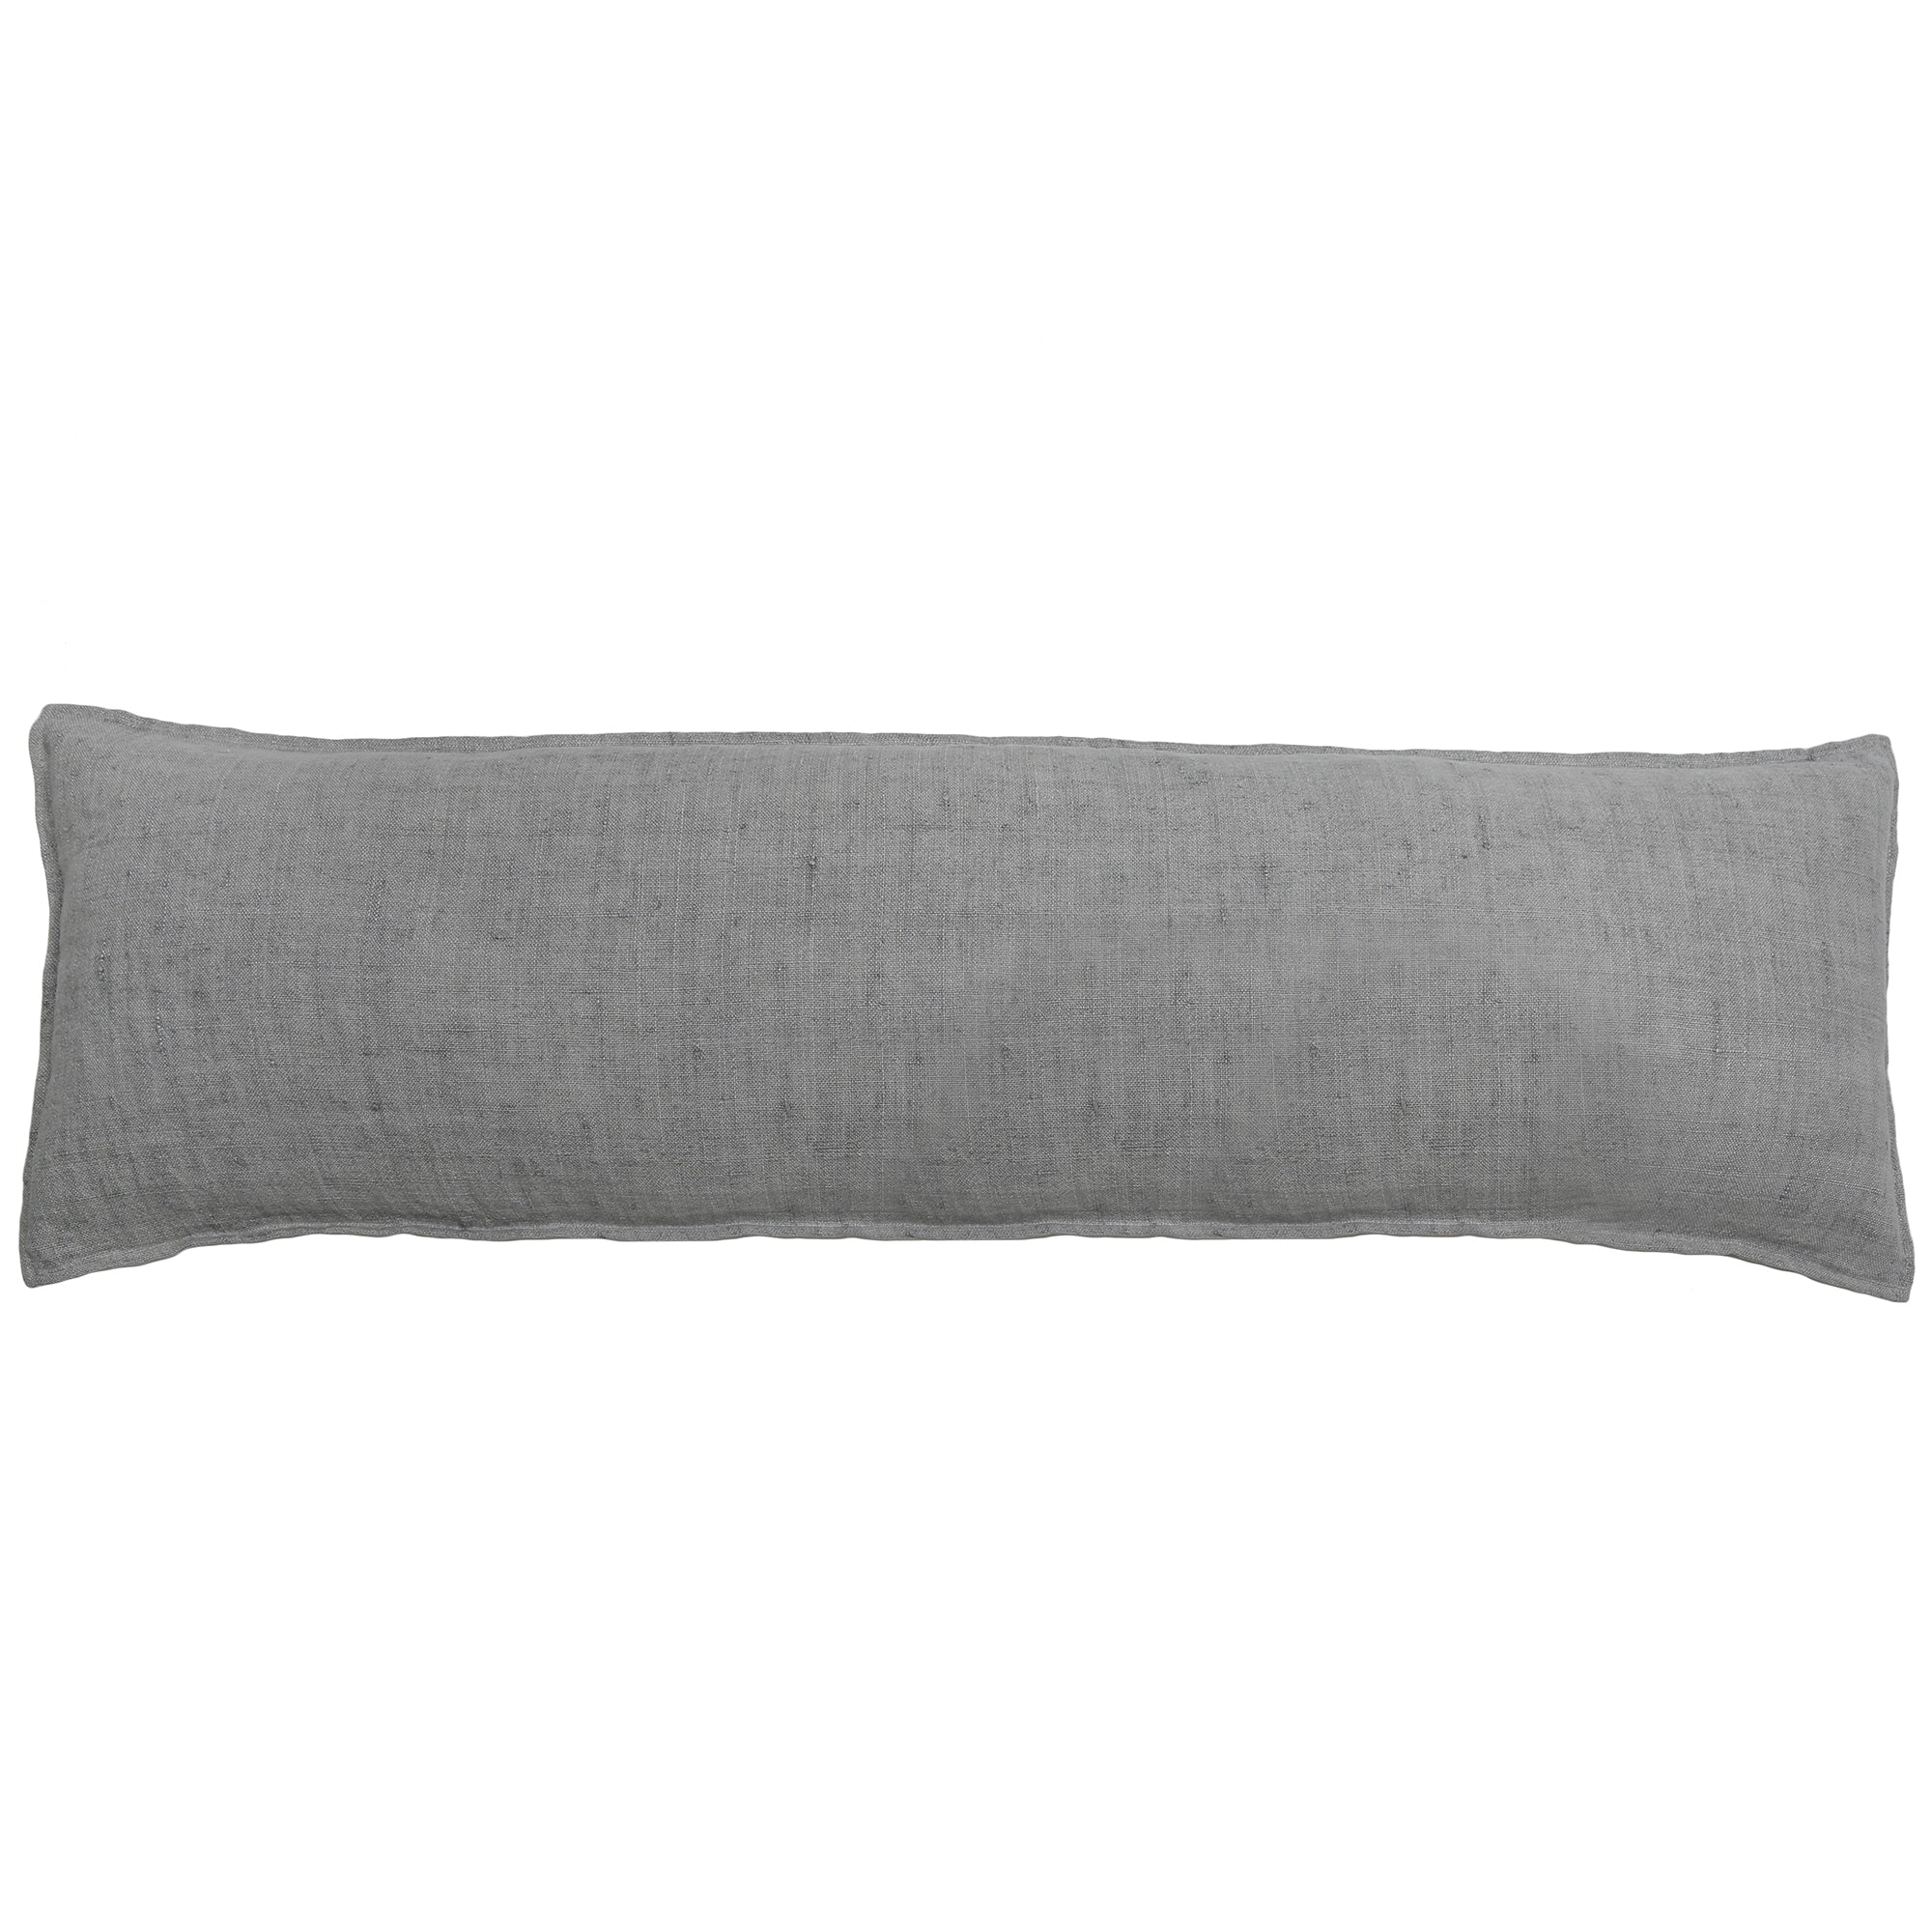 MONTAUK BLANKET - 7 Colors-body pillow-Pom Pom at Home